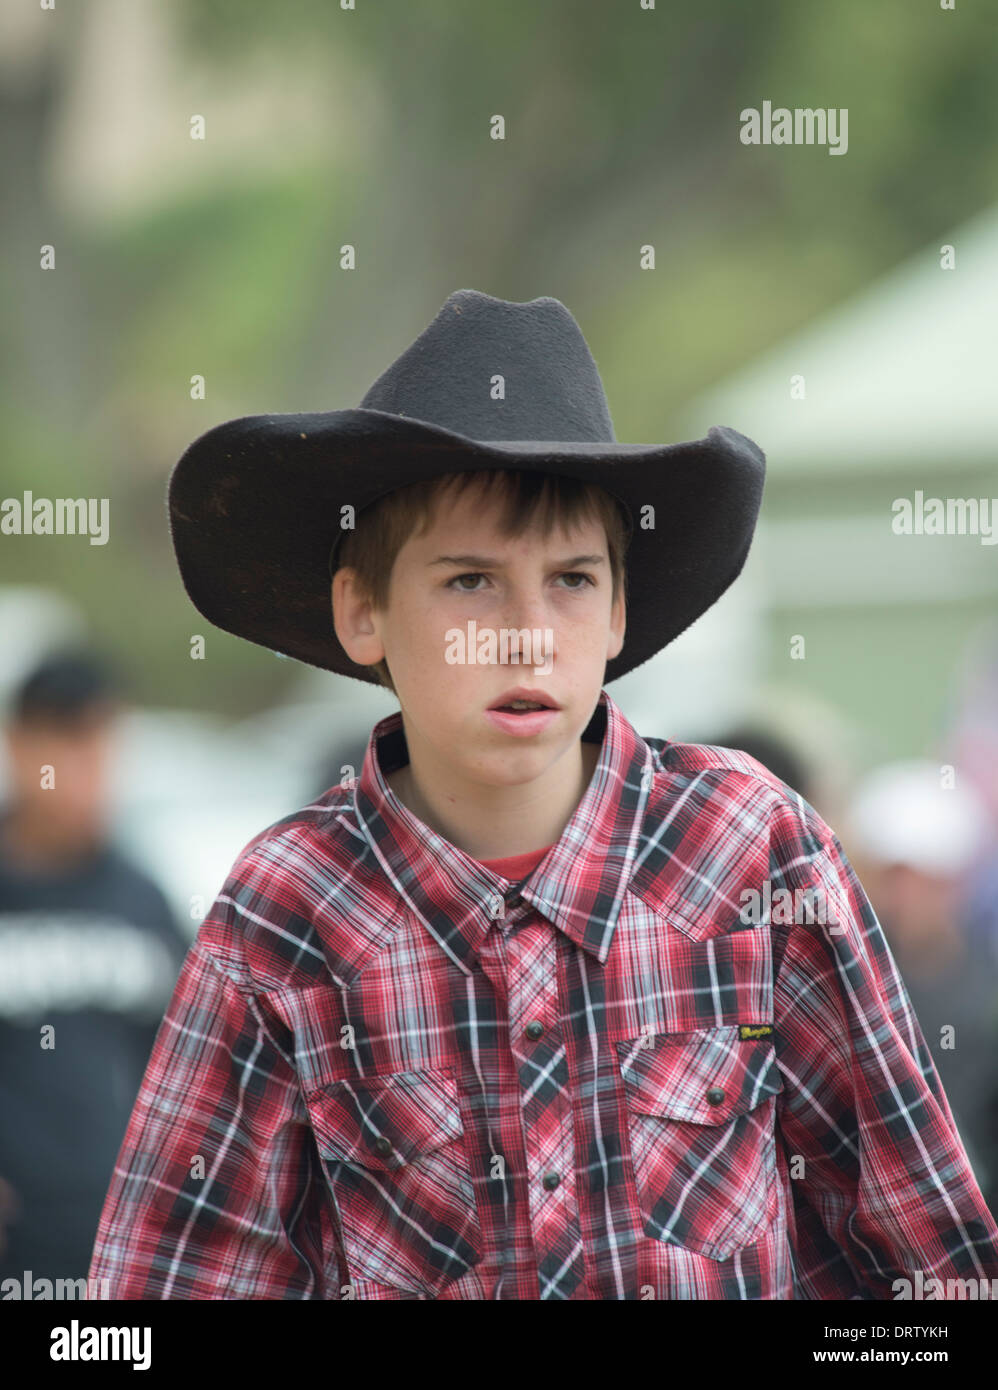 Young Boy wearing a Cowboy Hat - Australia Stock Photo - Alamy